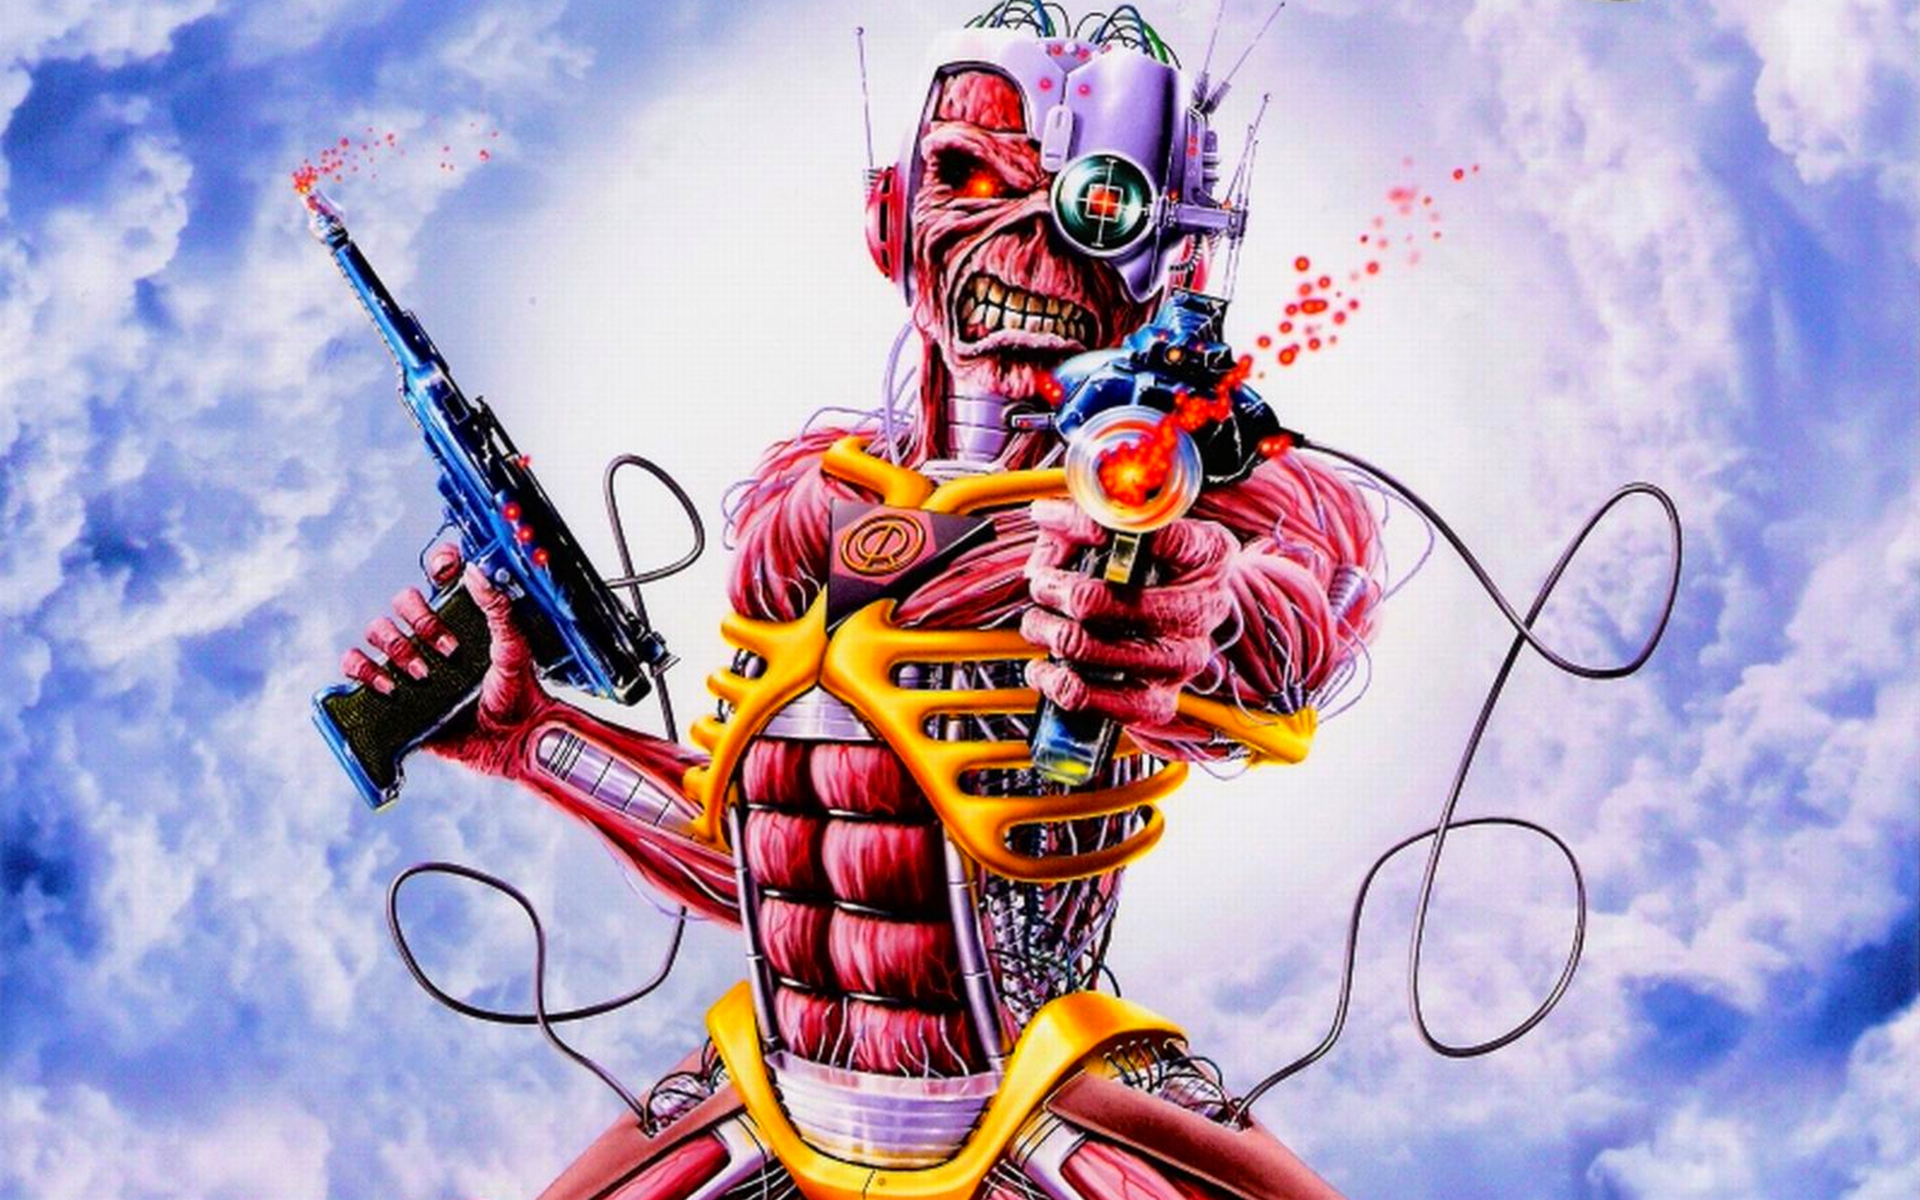 Music-themed desktop wallpaper featuring Cyber-Eddie from Iron Maiden.